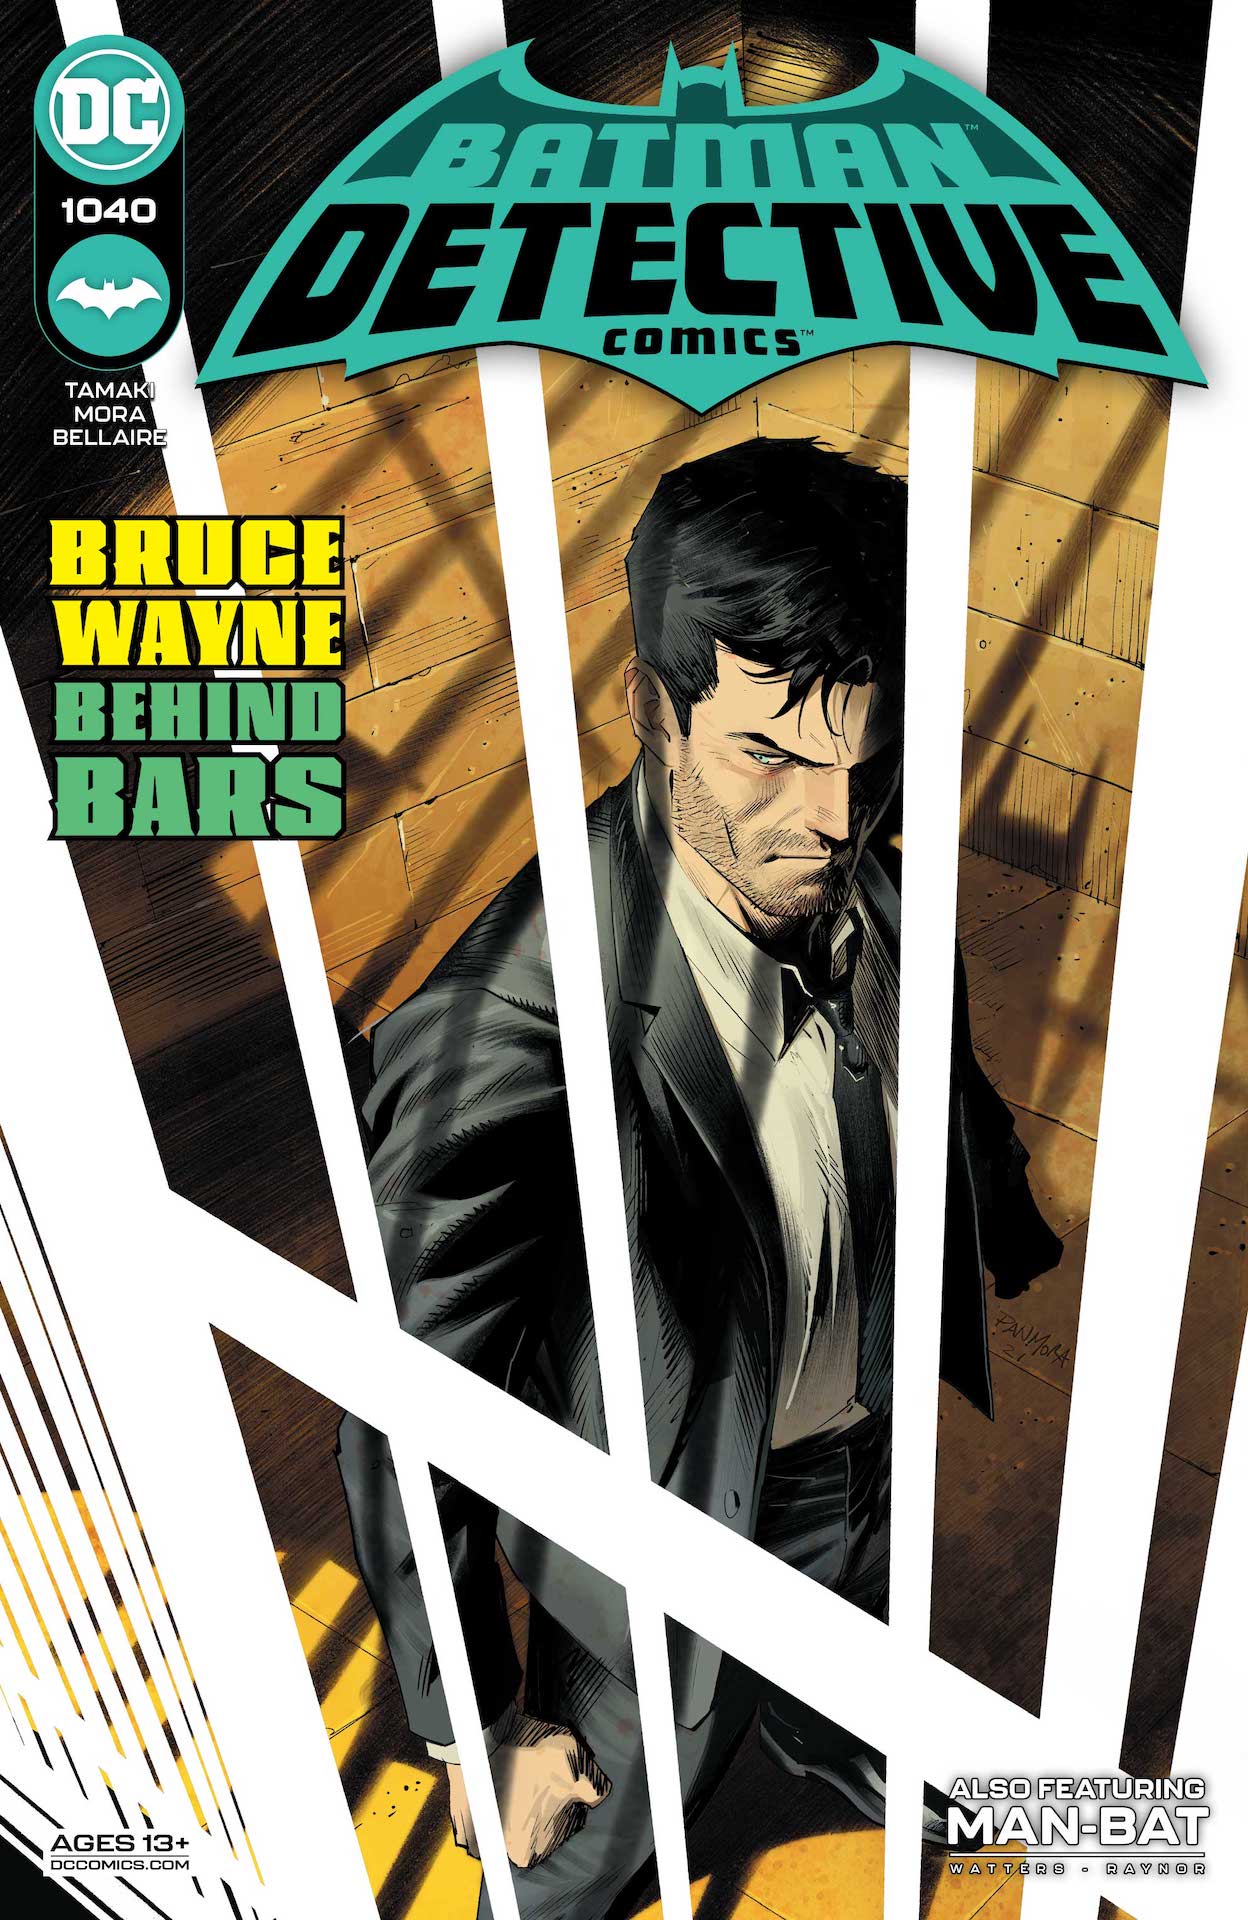 DC Preview: Detective Comics #1040